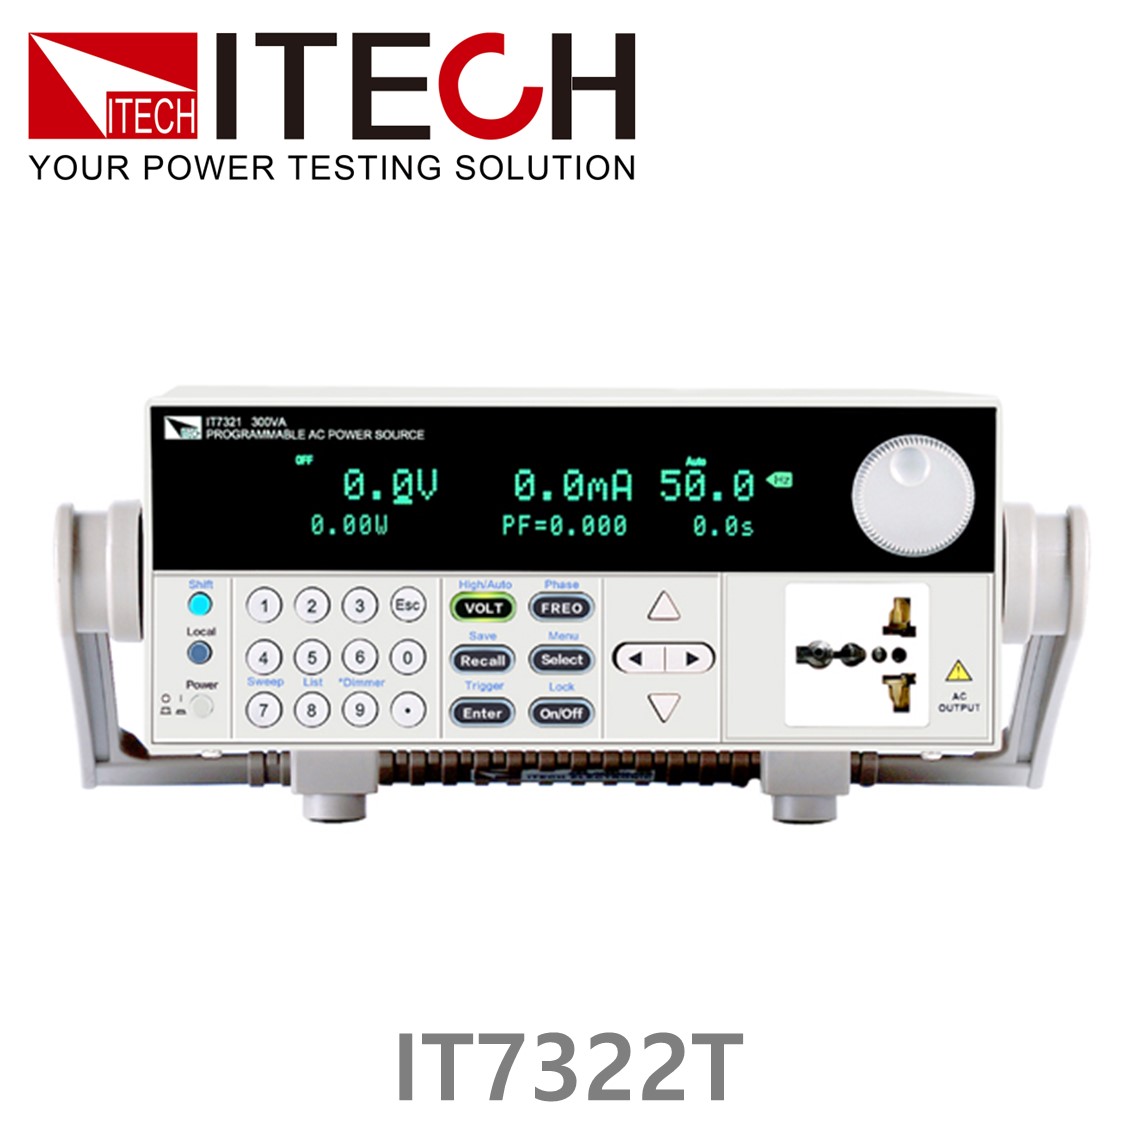 [ ITECH ] IT7322T  리니어 프로그래머블 AC전원공급기 150V/300V - 6A/3A - 2250VA (3φ) (15U)